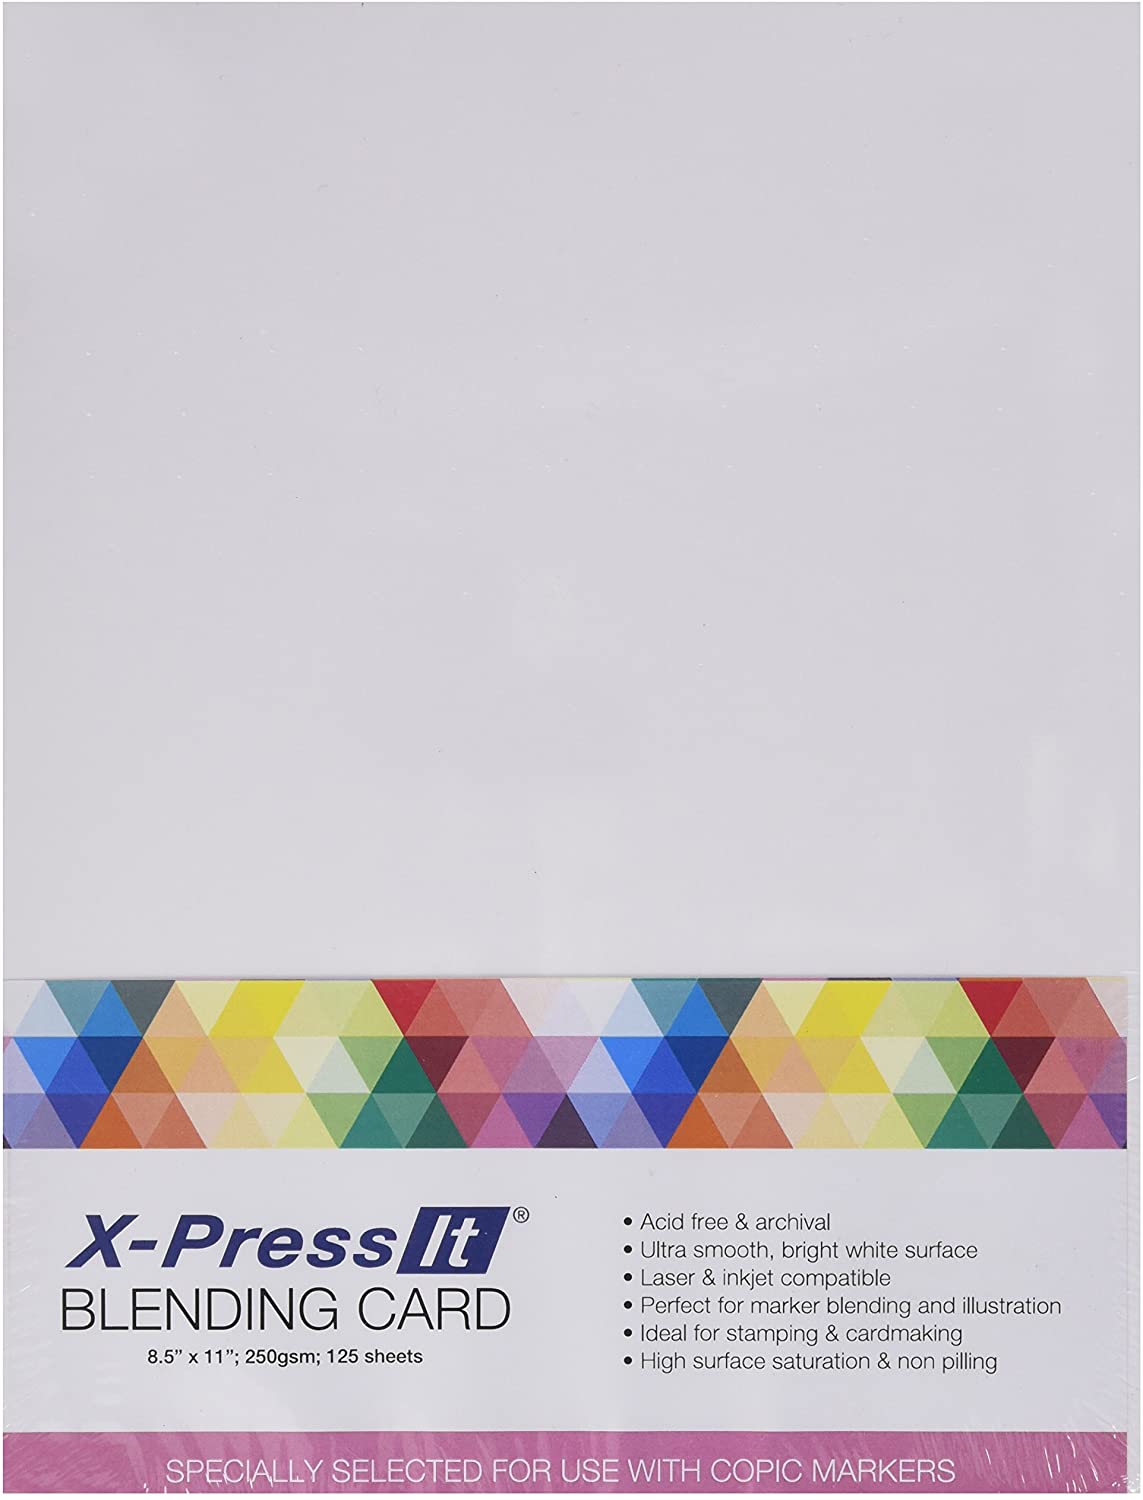 x-press it blending card